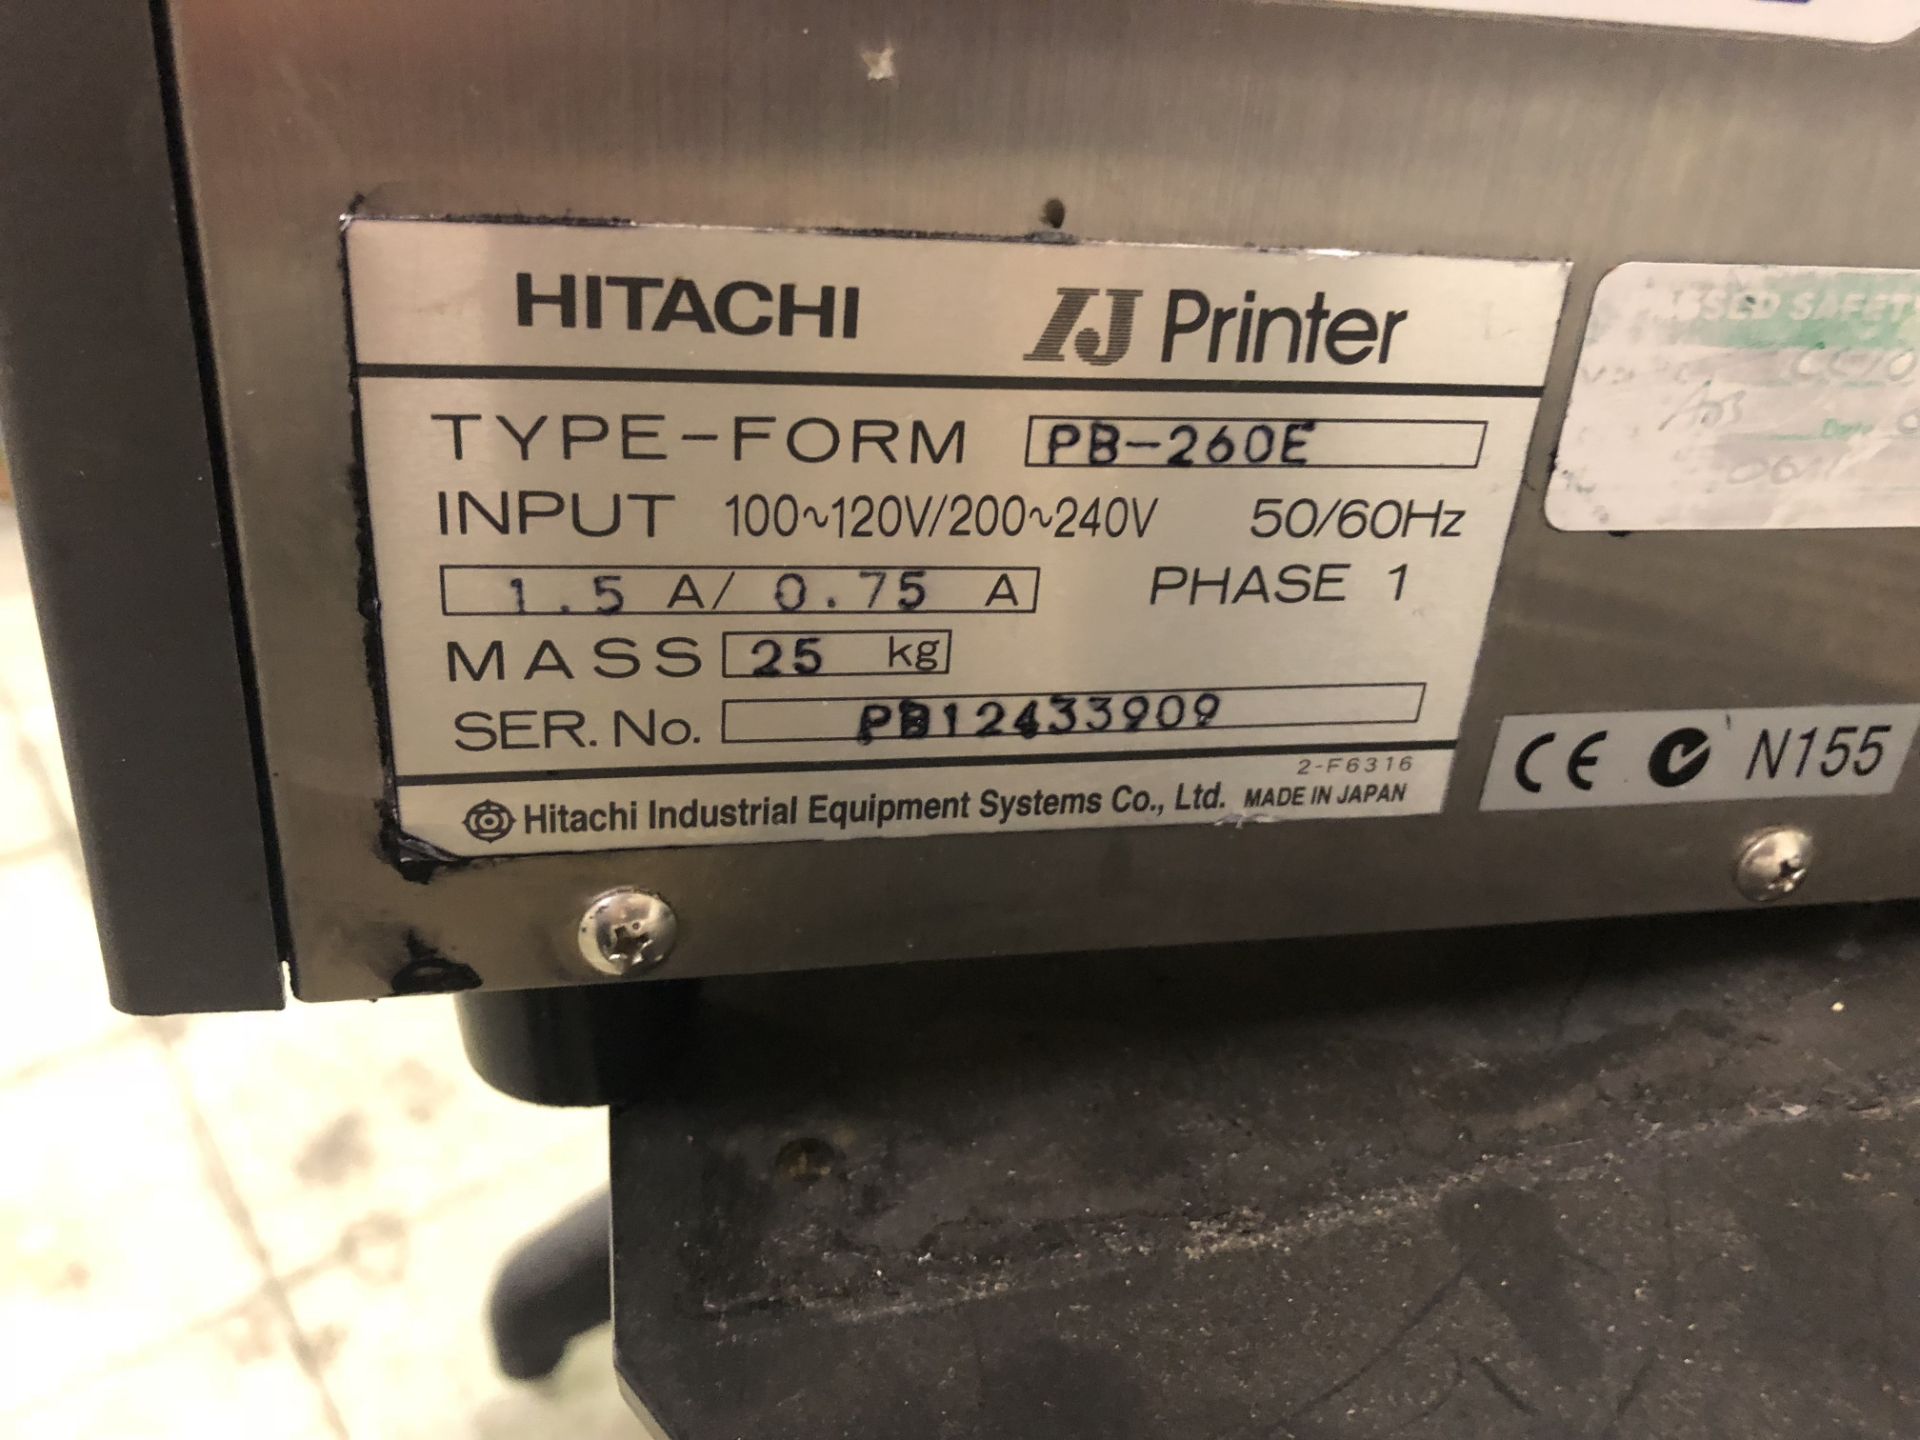 Hitachi INK JET PRINTER Model PB-260E, S/s. Manufactured by Hitachi. LO £50 - Image 2 of 3